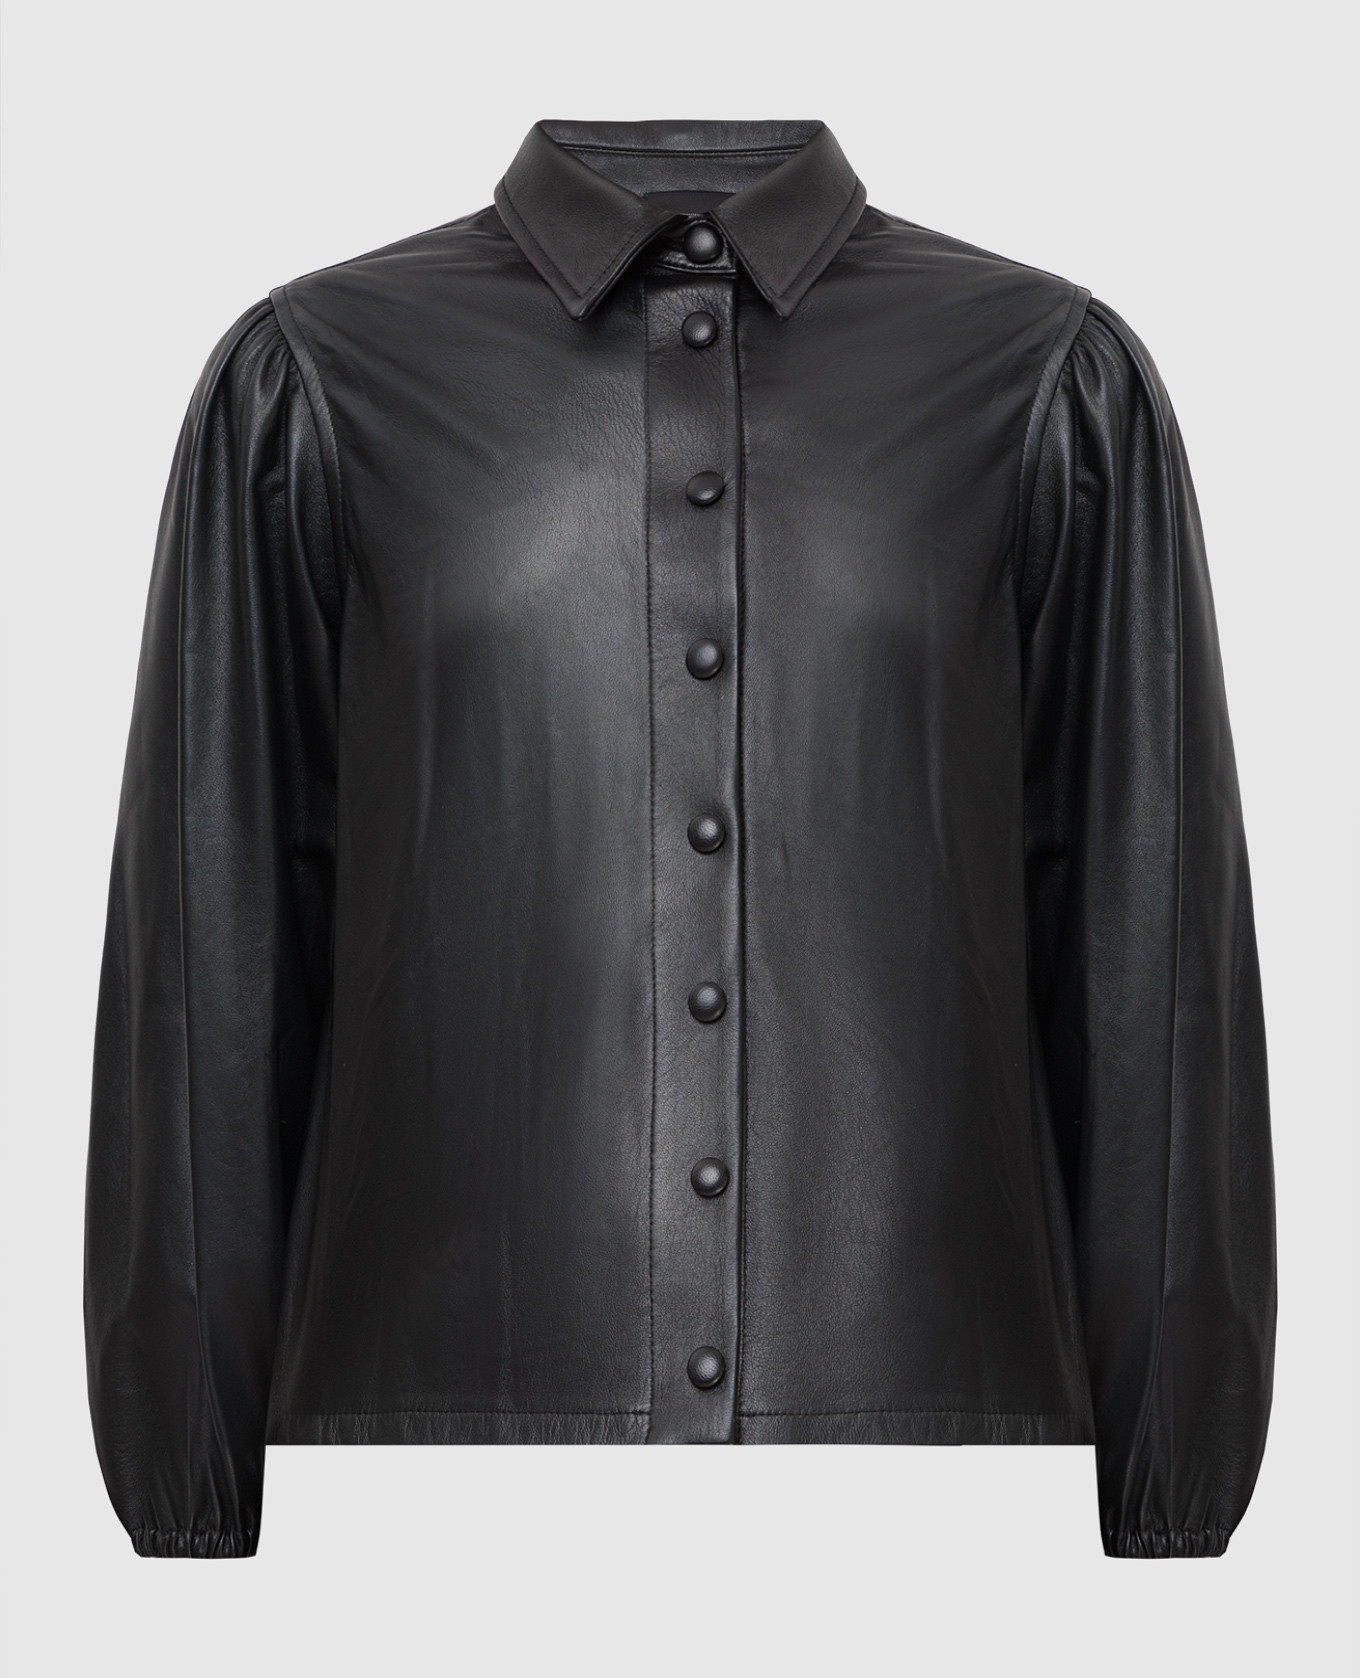 Black leather shirt